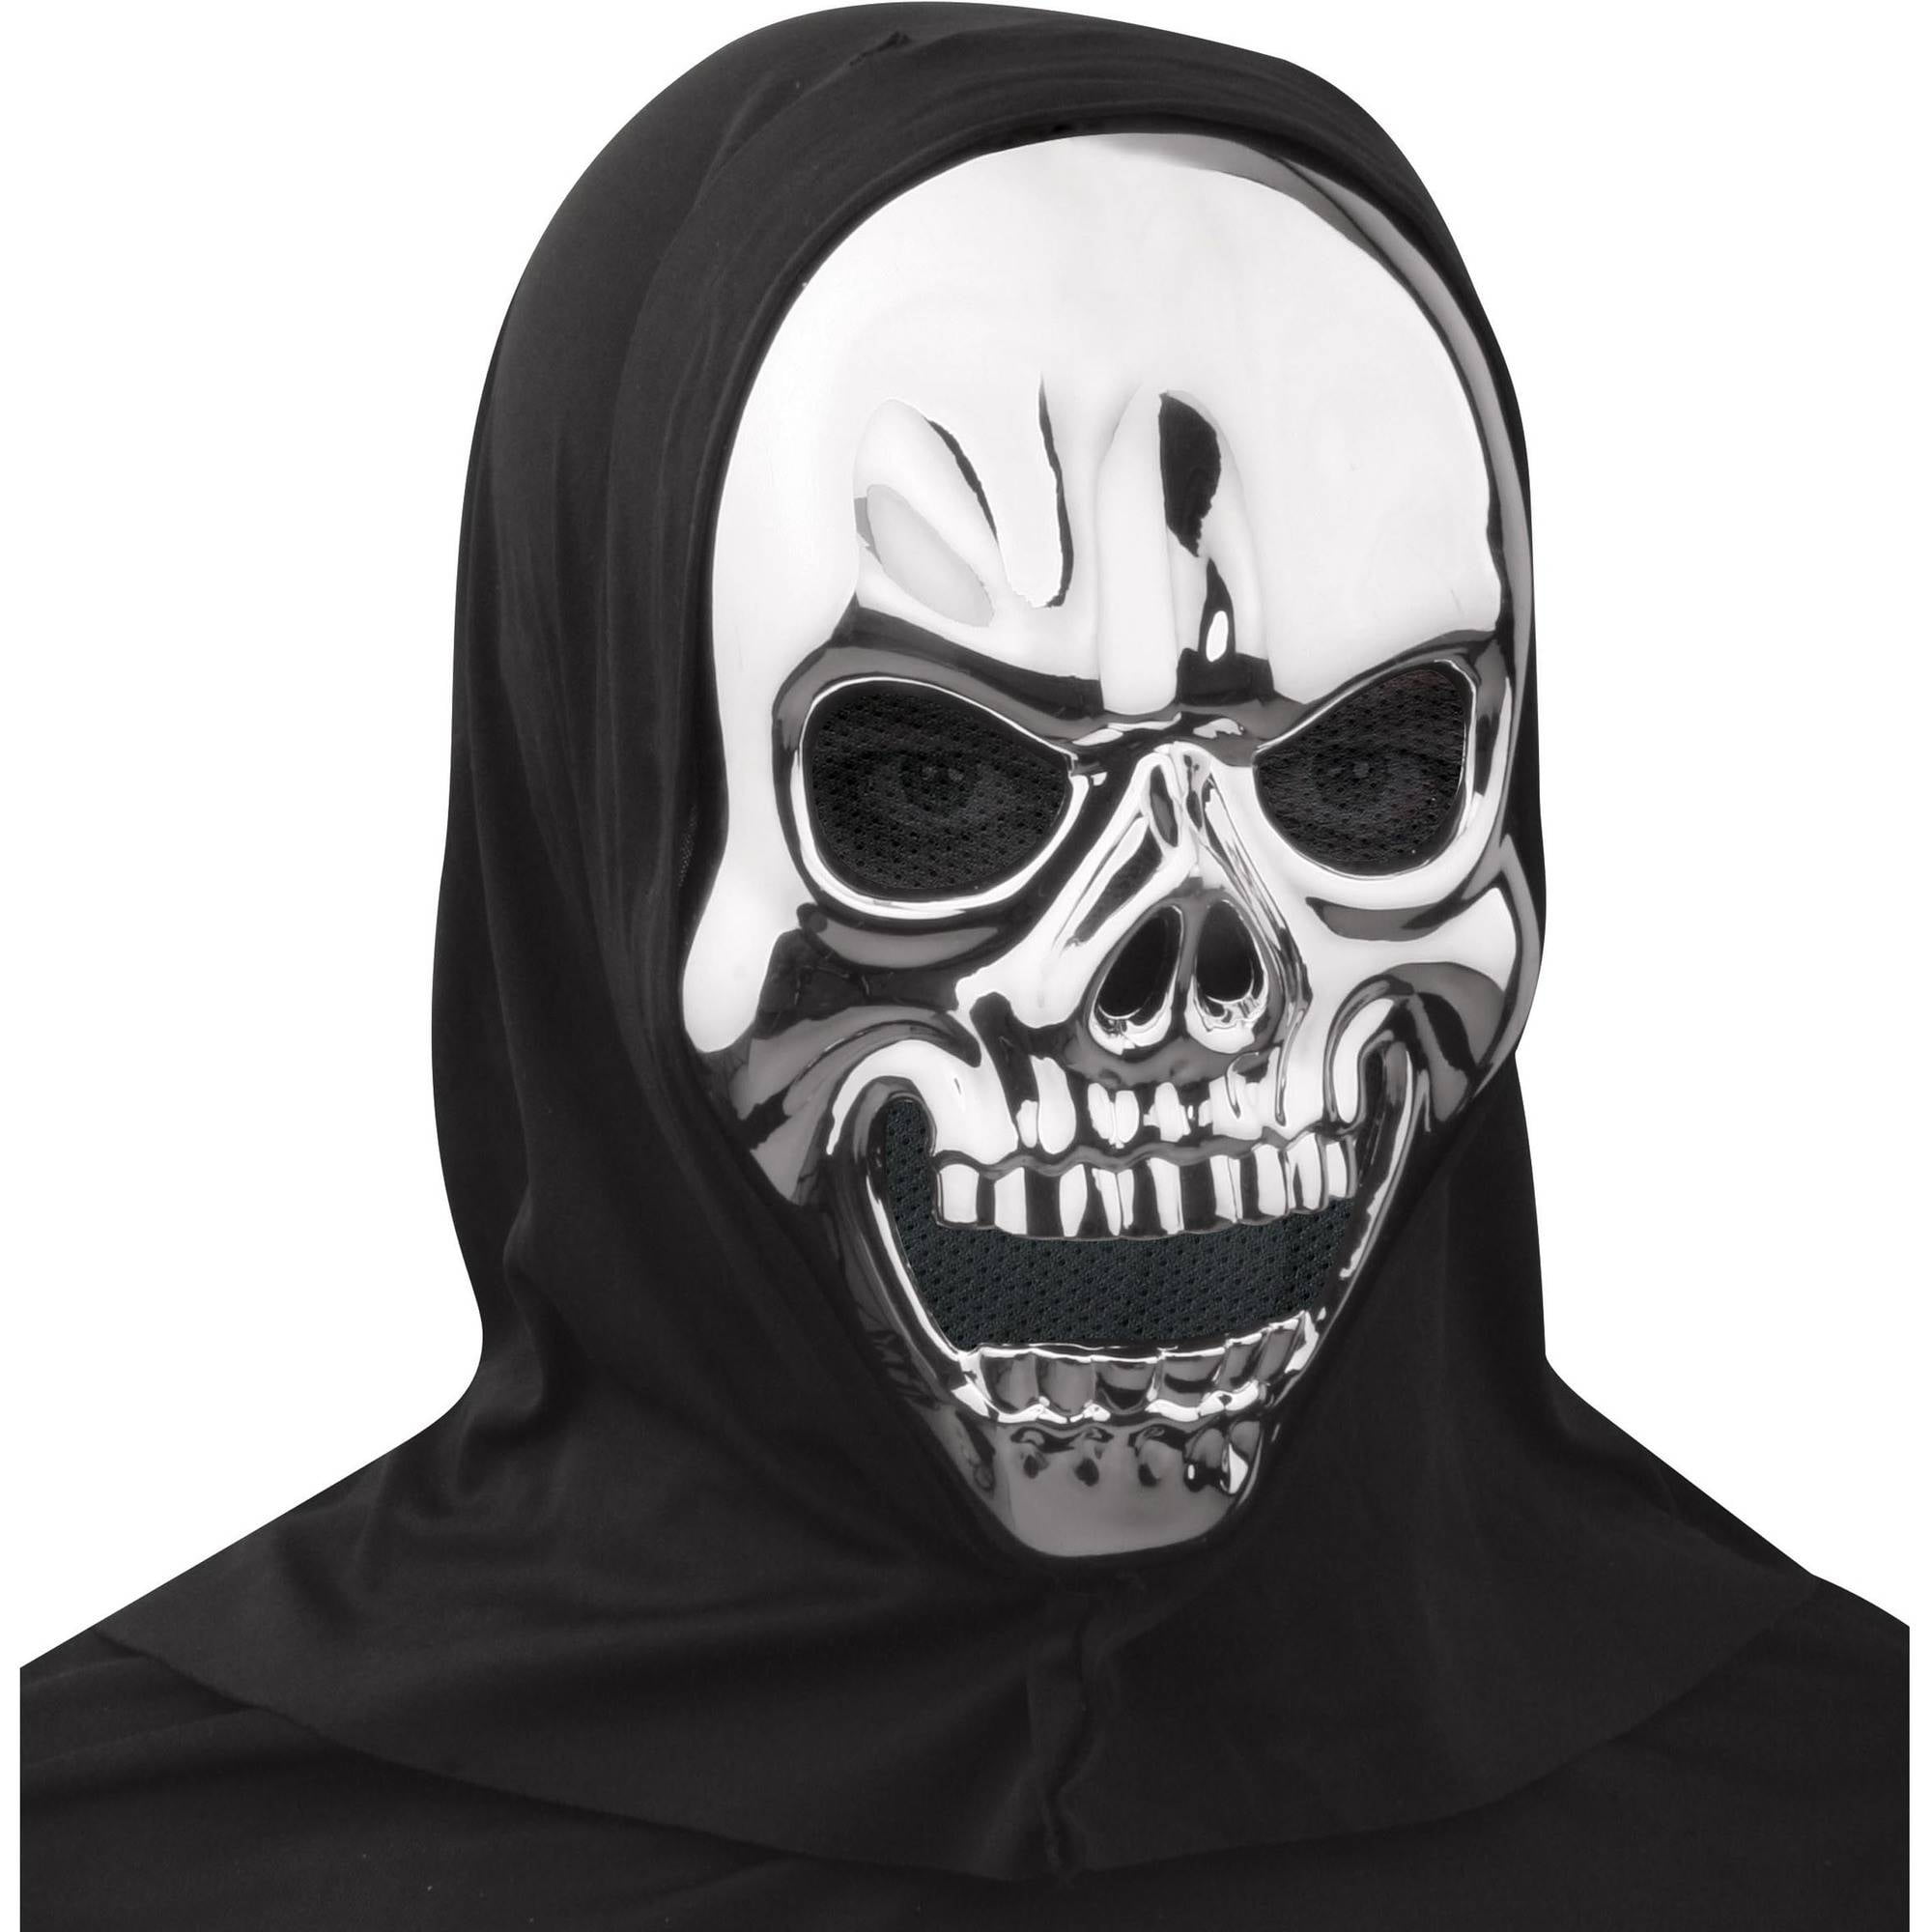 Metallic Silver Skull  Mask  Halloween  Accessory Walmart com